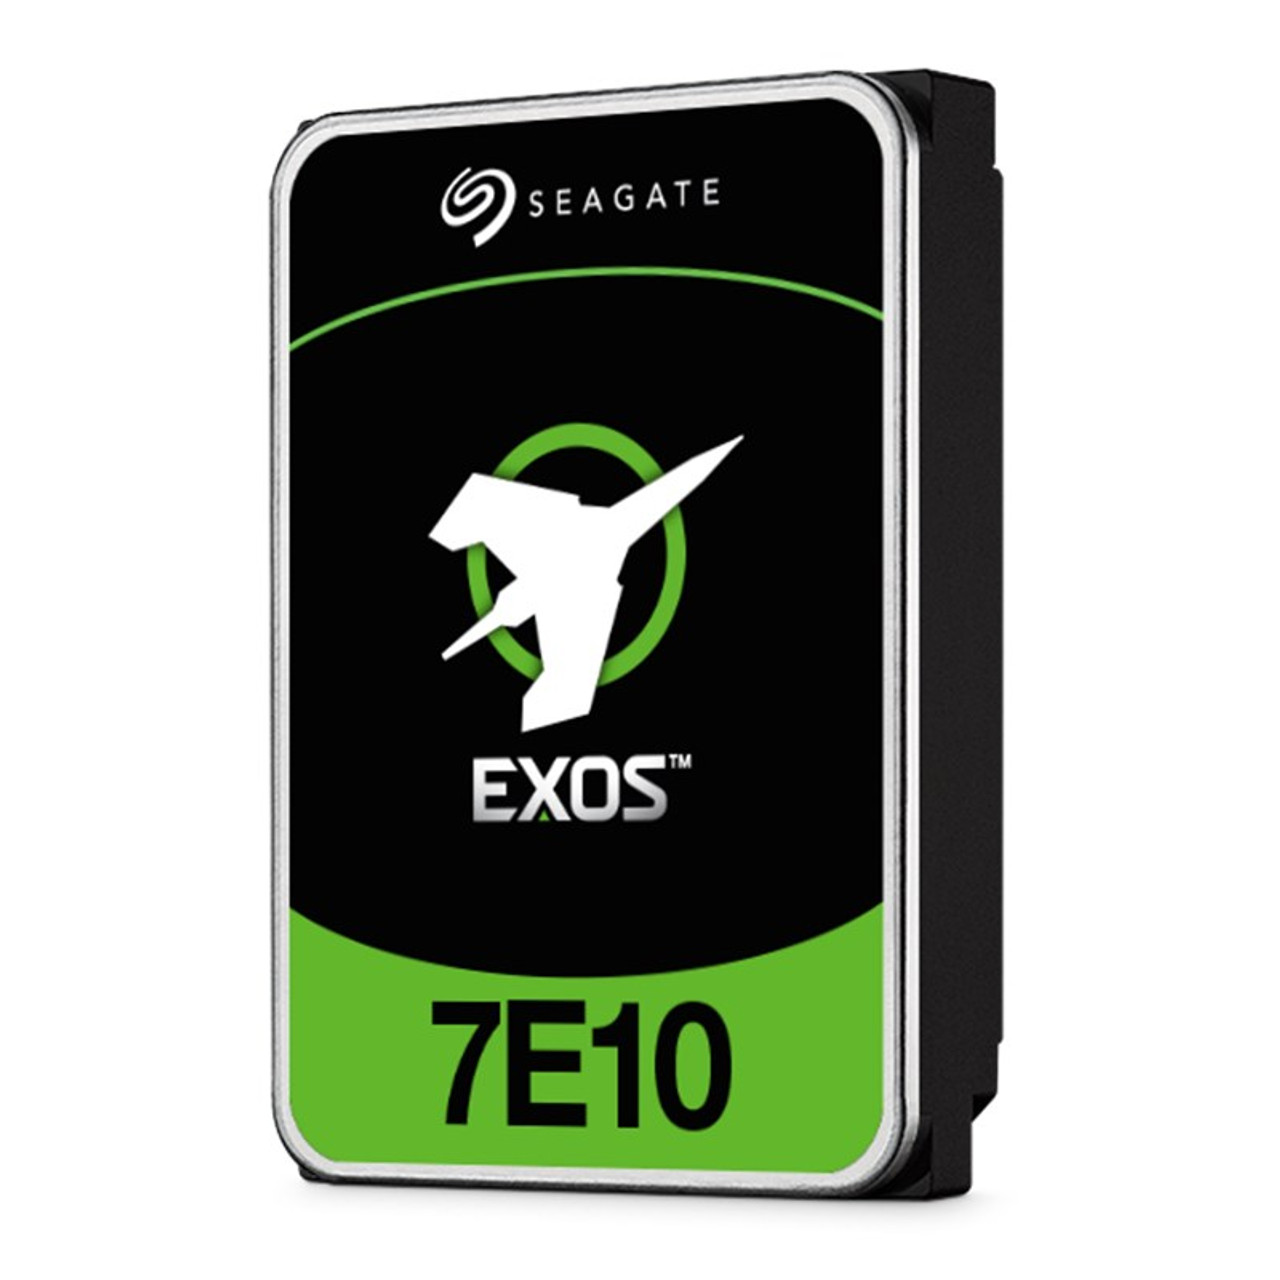 Seagate Exos 7E10 Enterprise Hard Drive 8 TB - ST8000NM017B